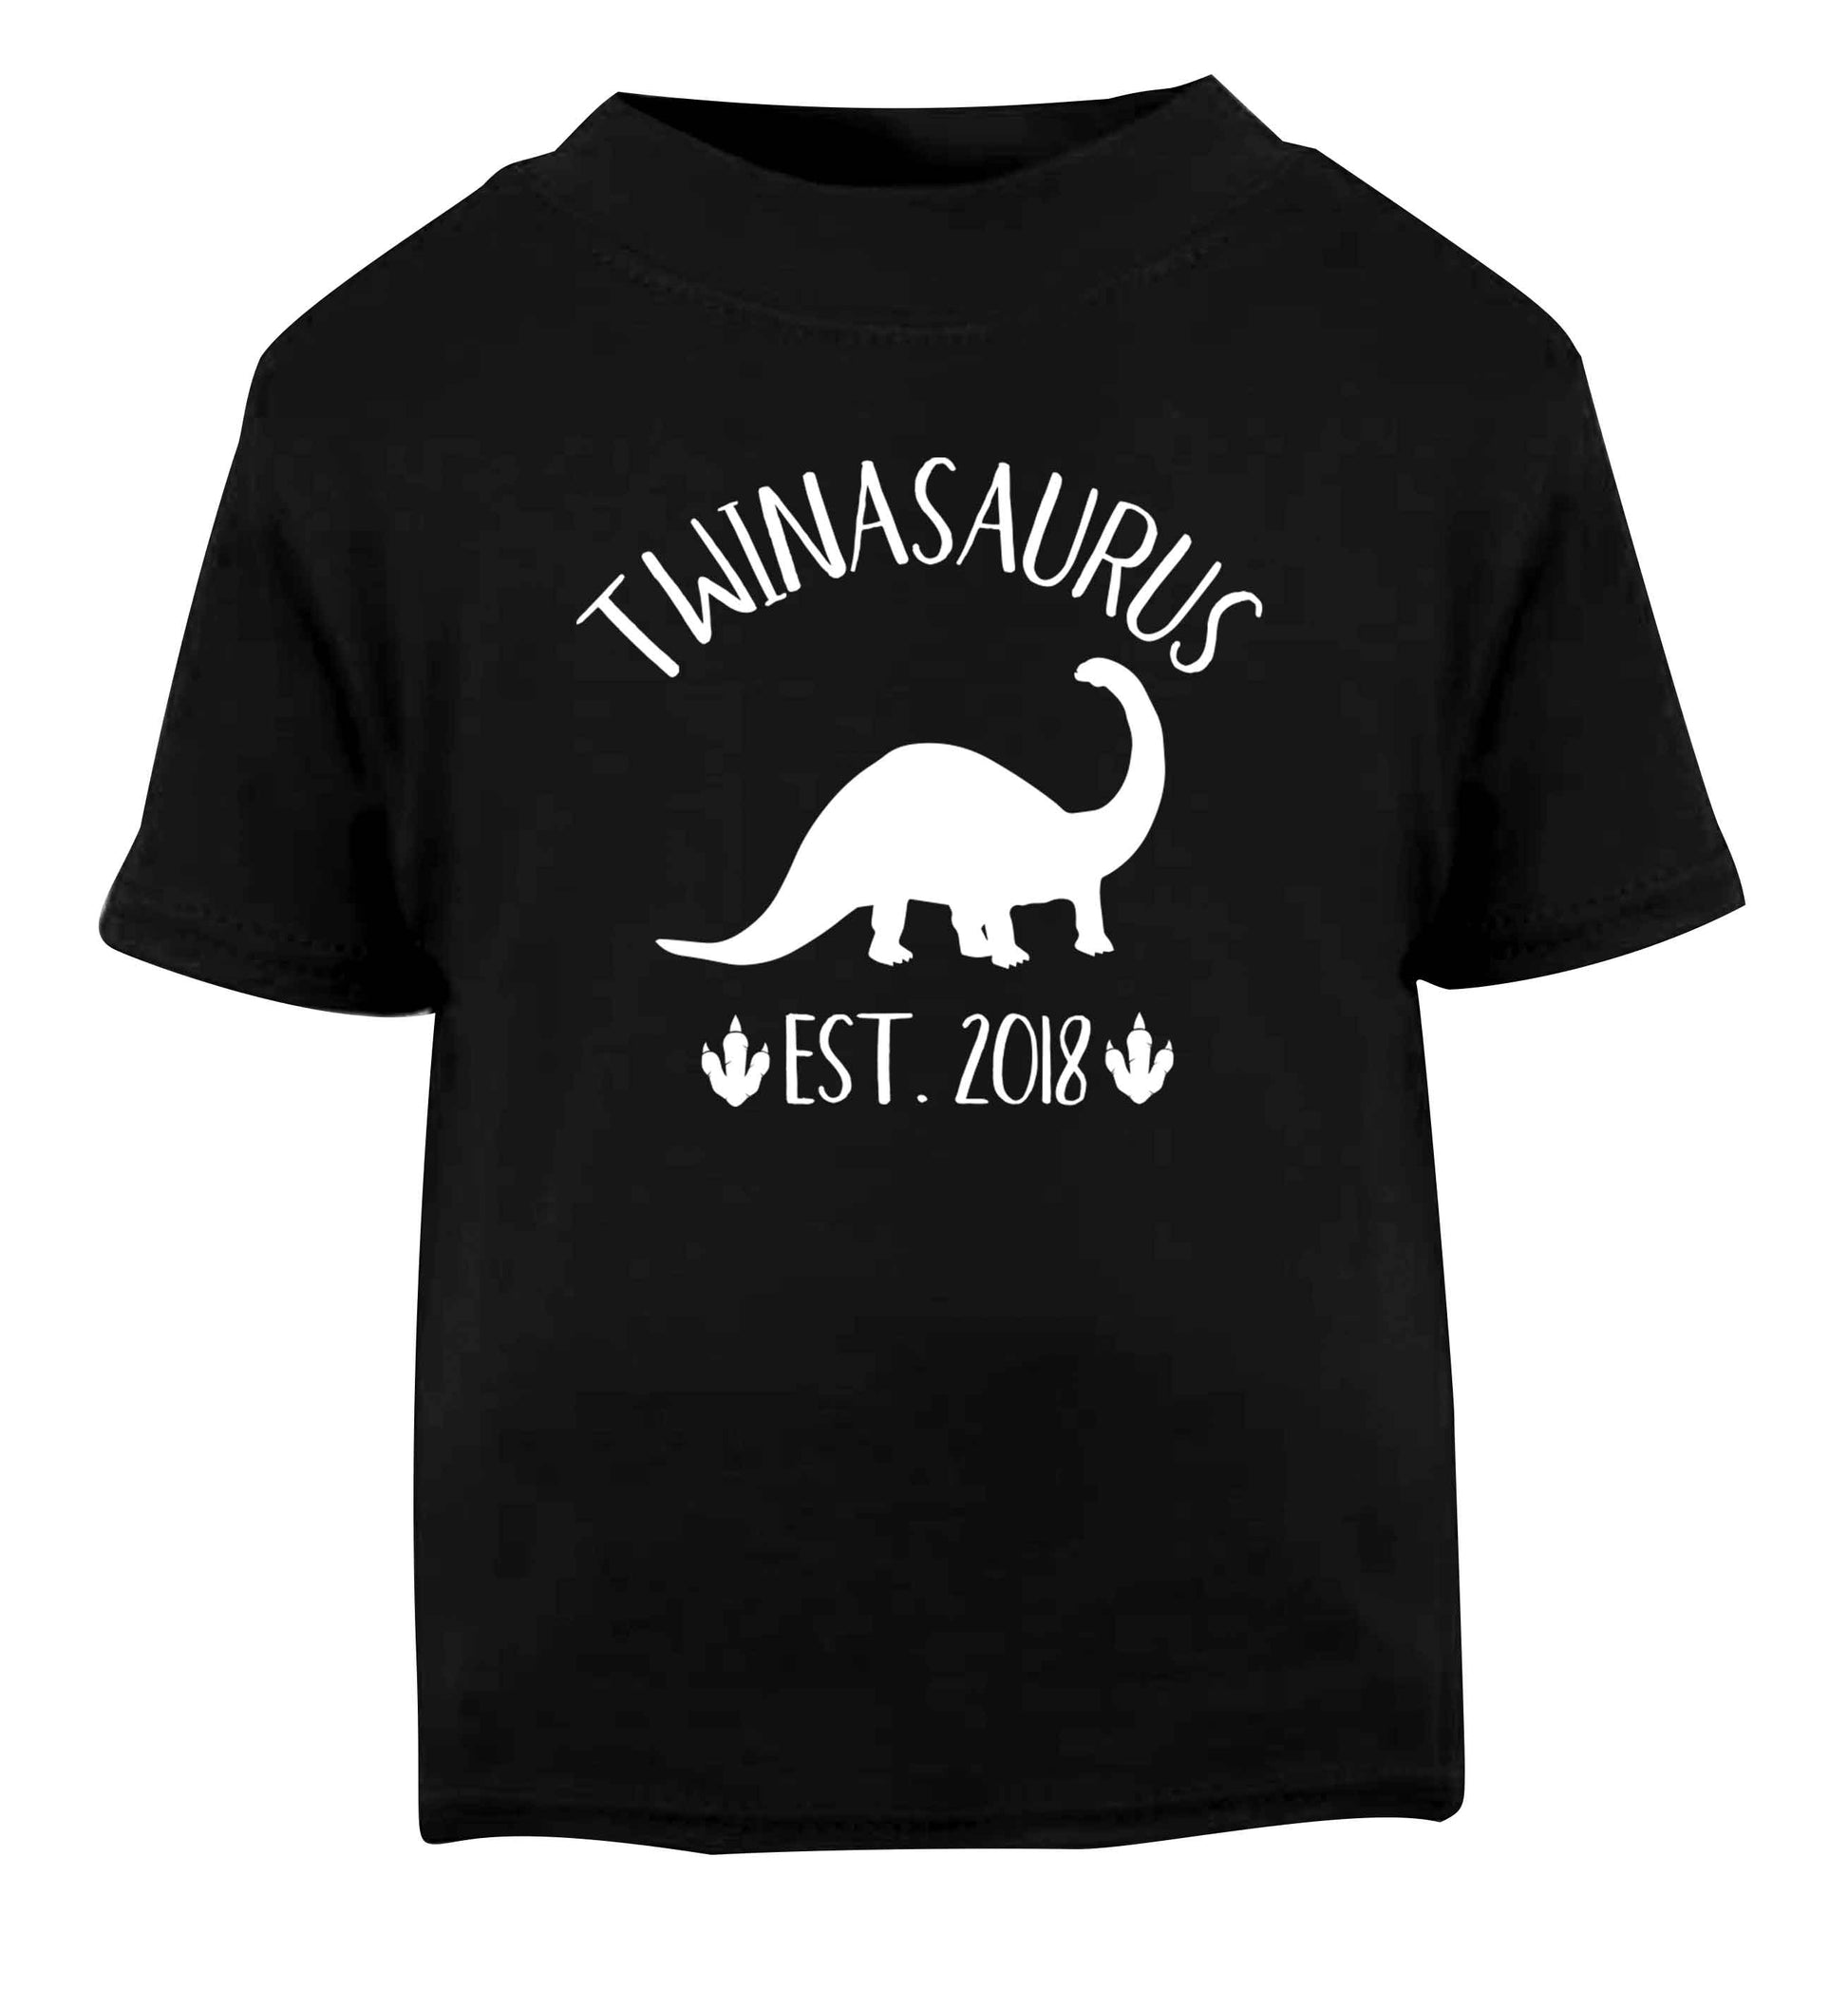 Personalised twinasaurus since (custom date) Black Baby Toddler Tshirt 2 years